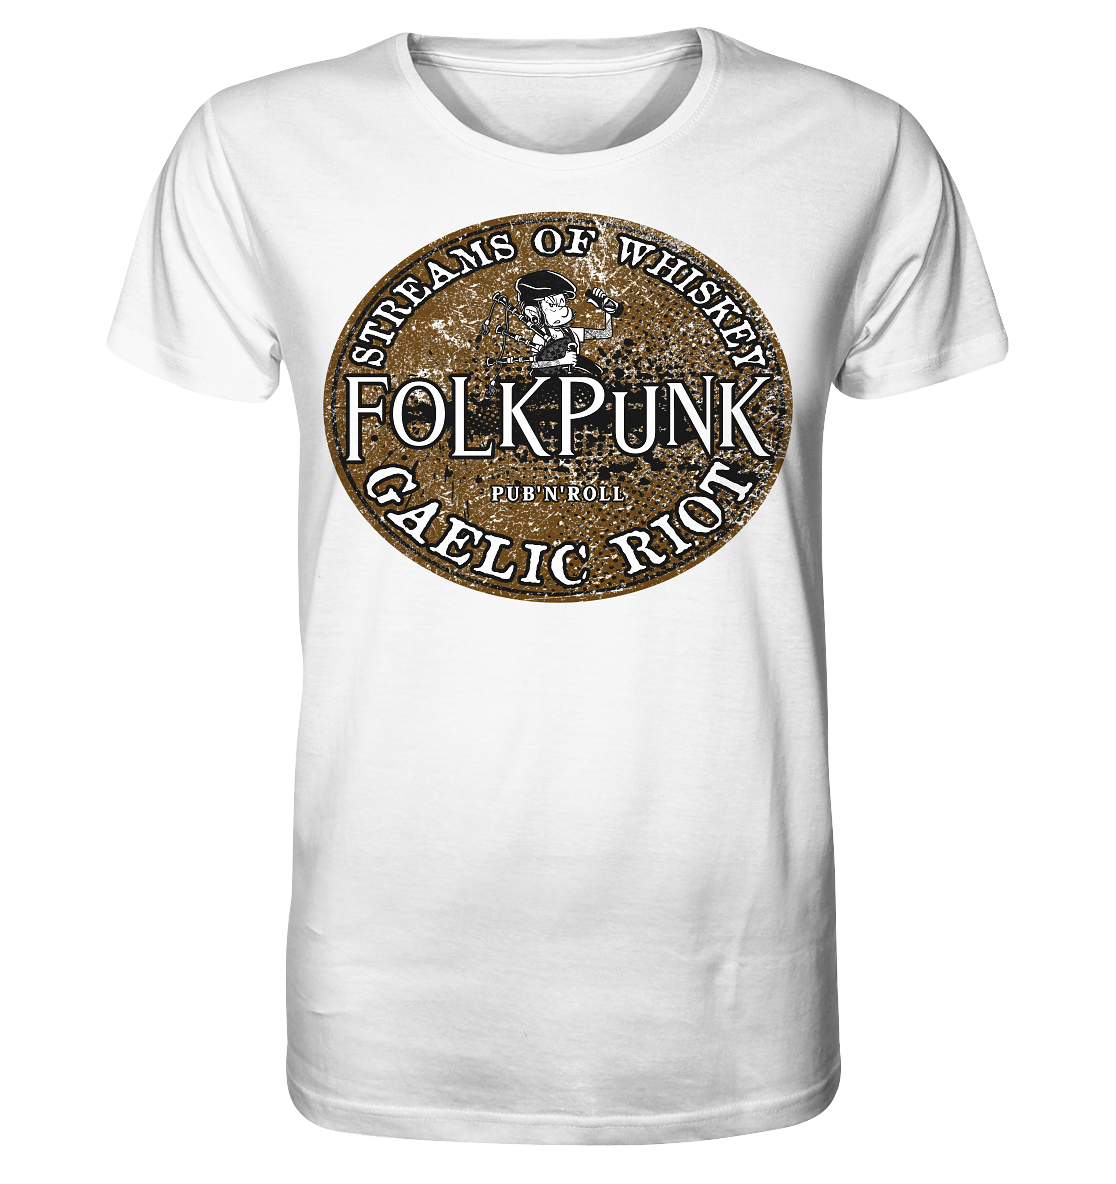 Folkpunk "Streams Of Whiskey" - Organic Shirt